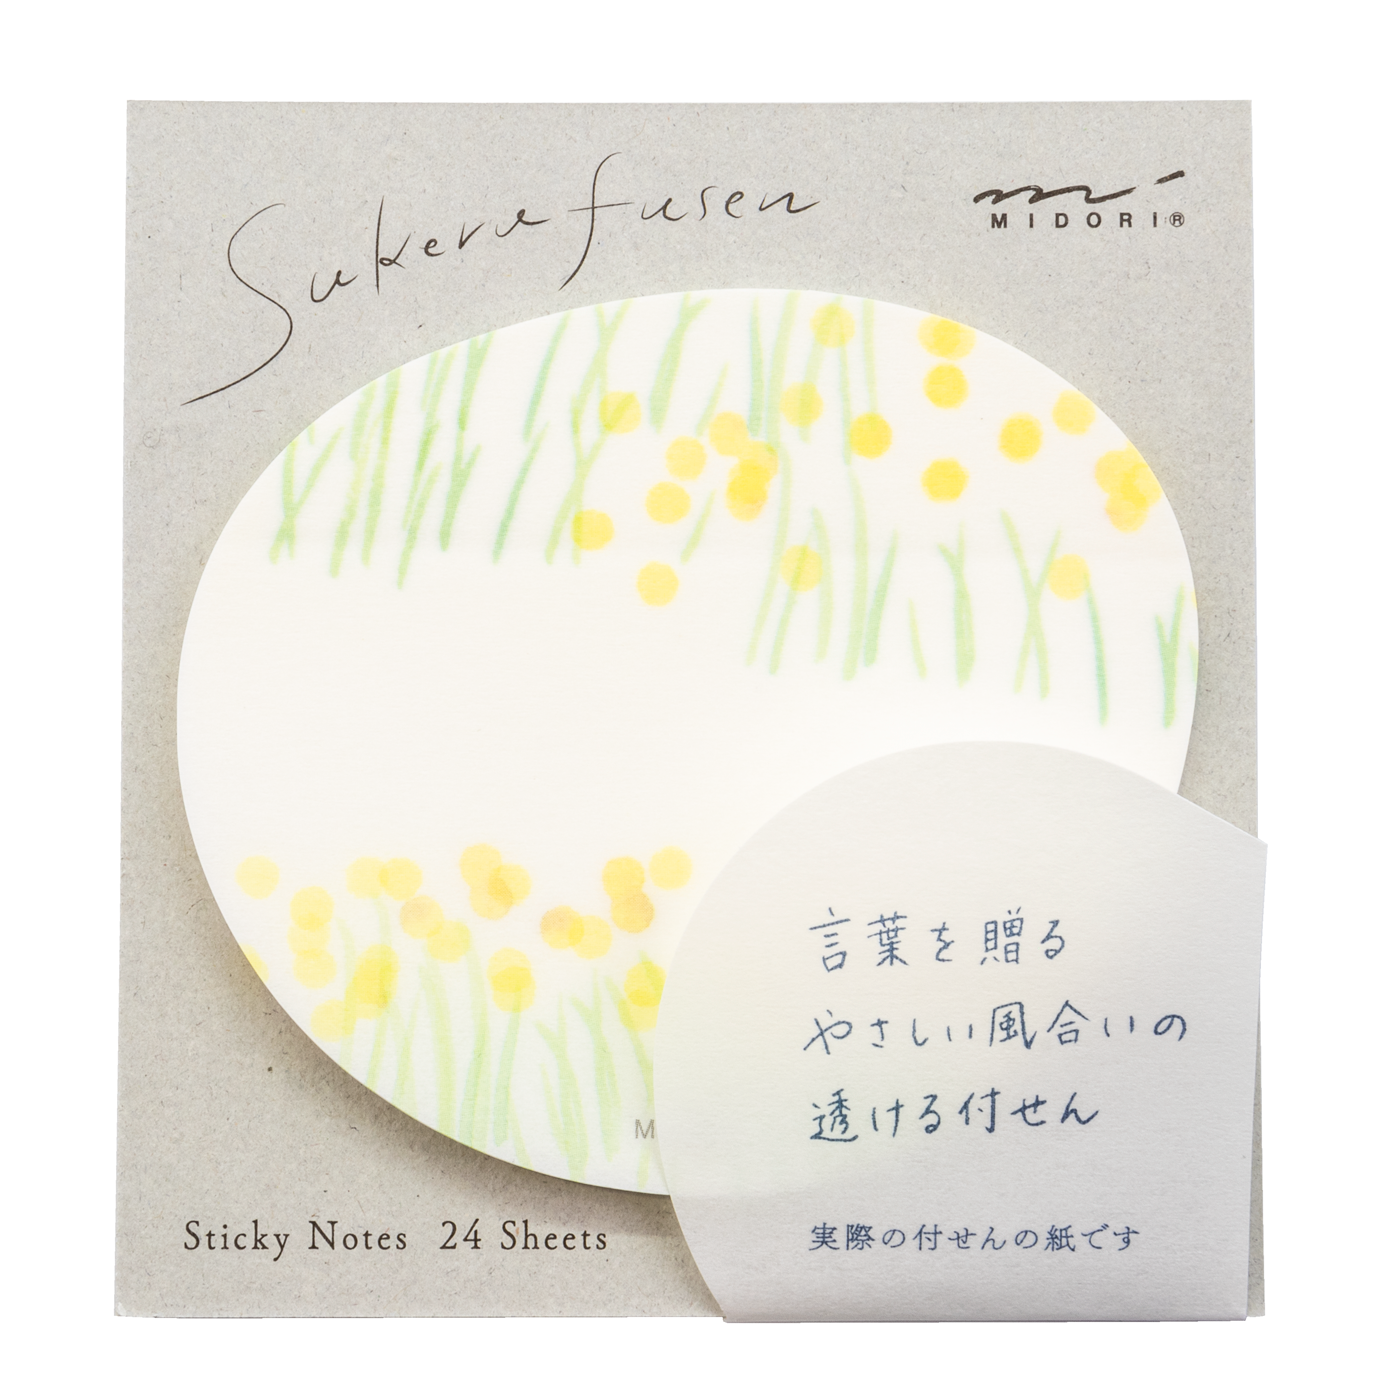 Midori Sticky Note Transparency - Flower Garden